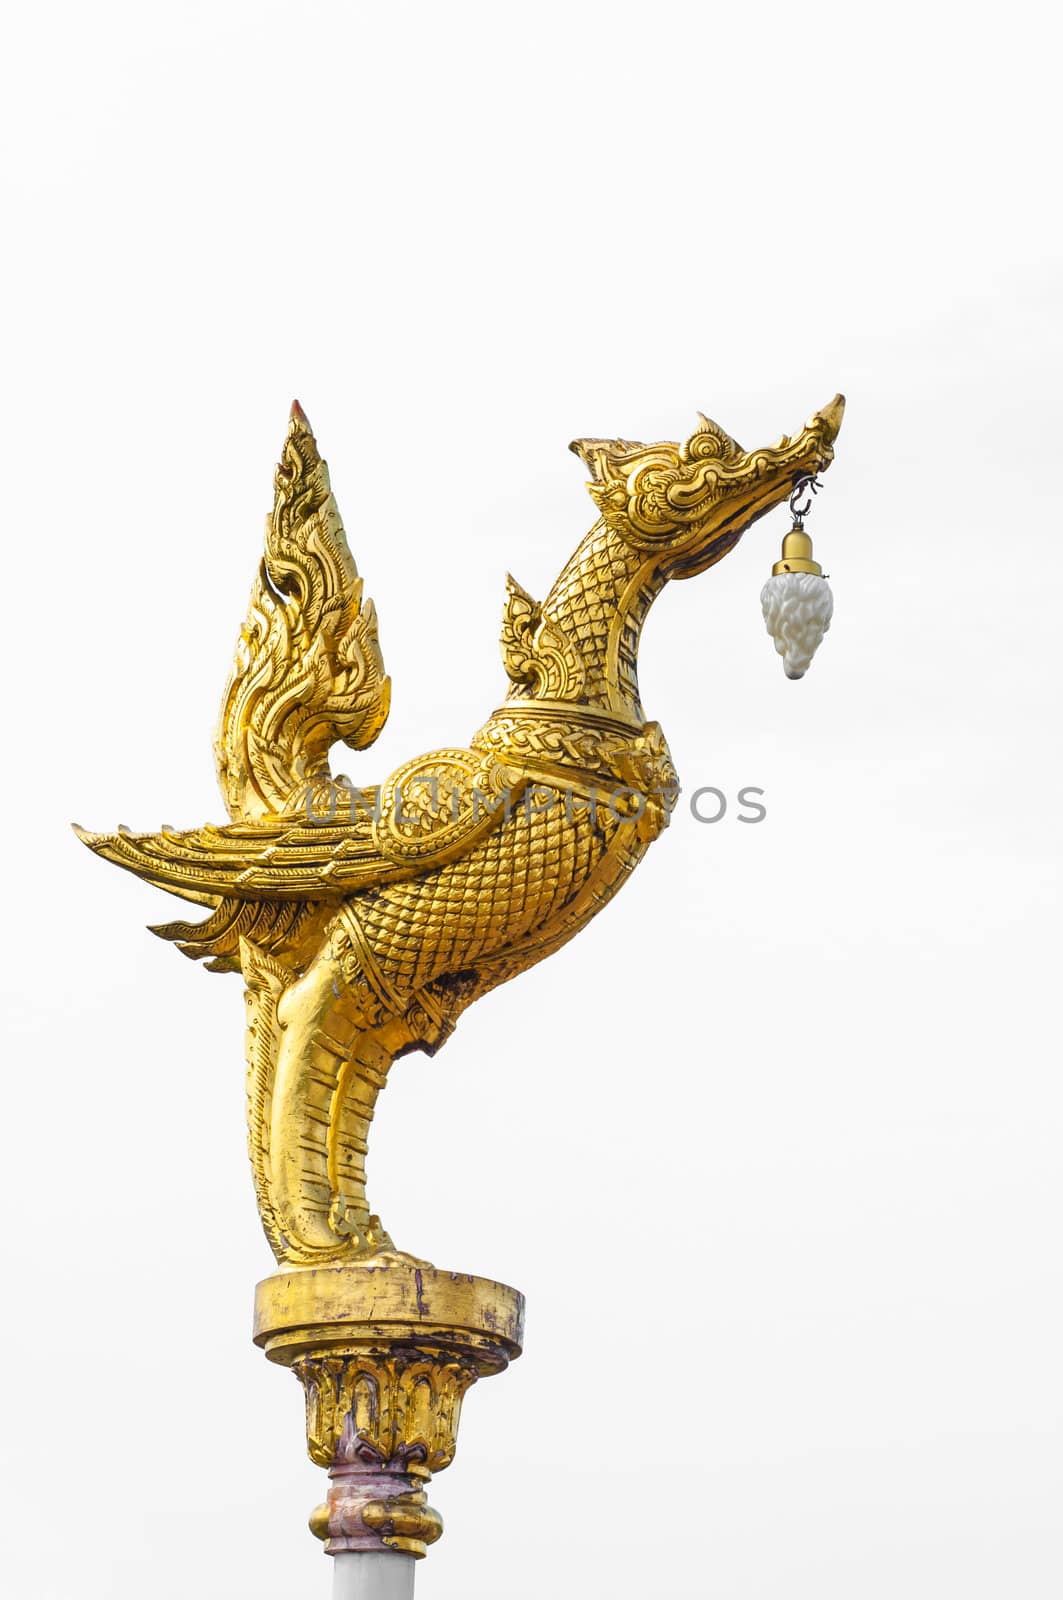 Golden statue of creature by TanawatPontchour